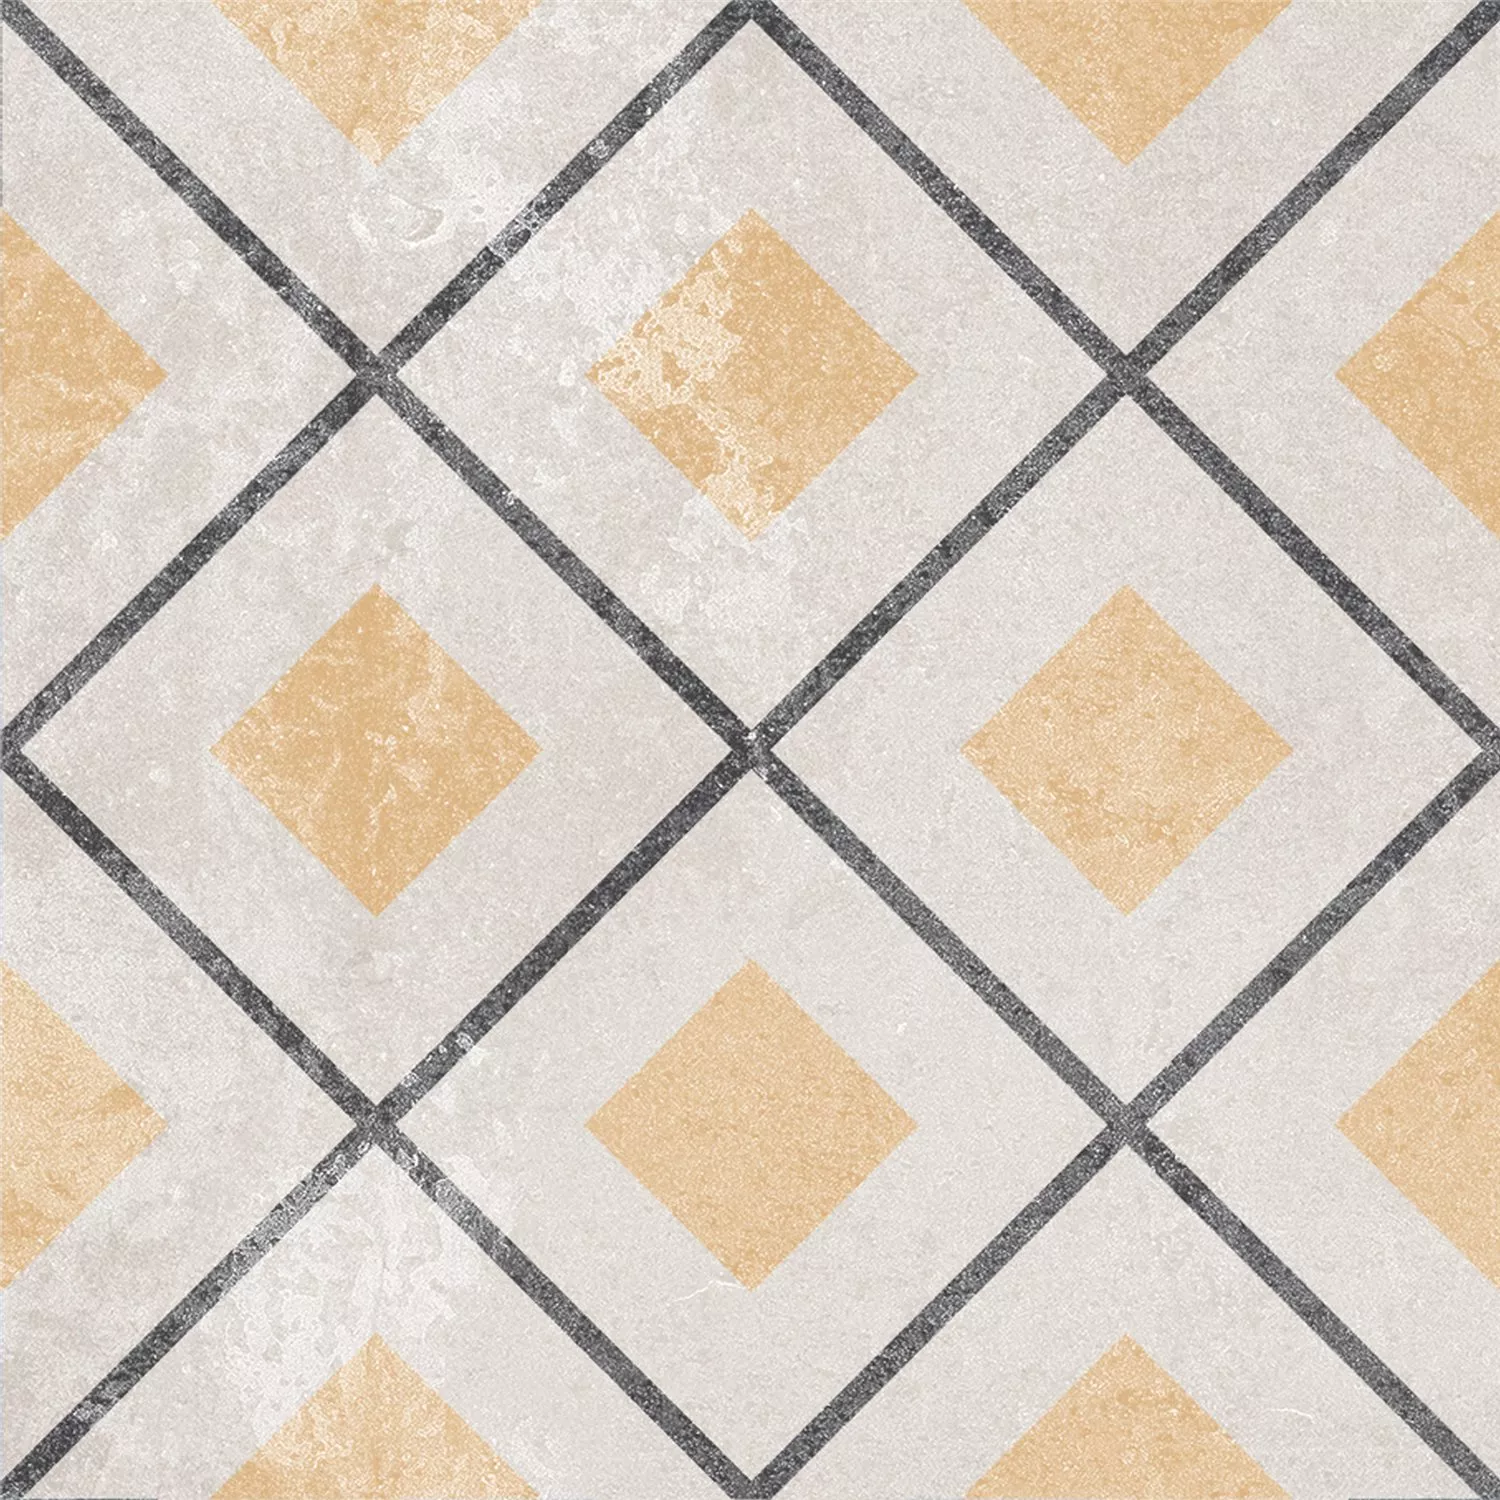 Cement Tiles Retro Optic Gris Floor Tiles Cubero 18,6x18,6cm